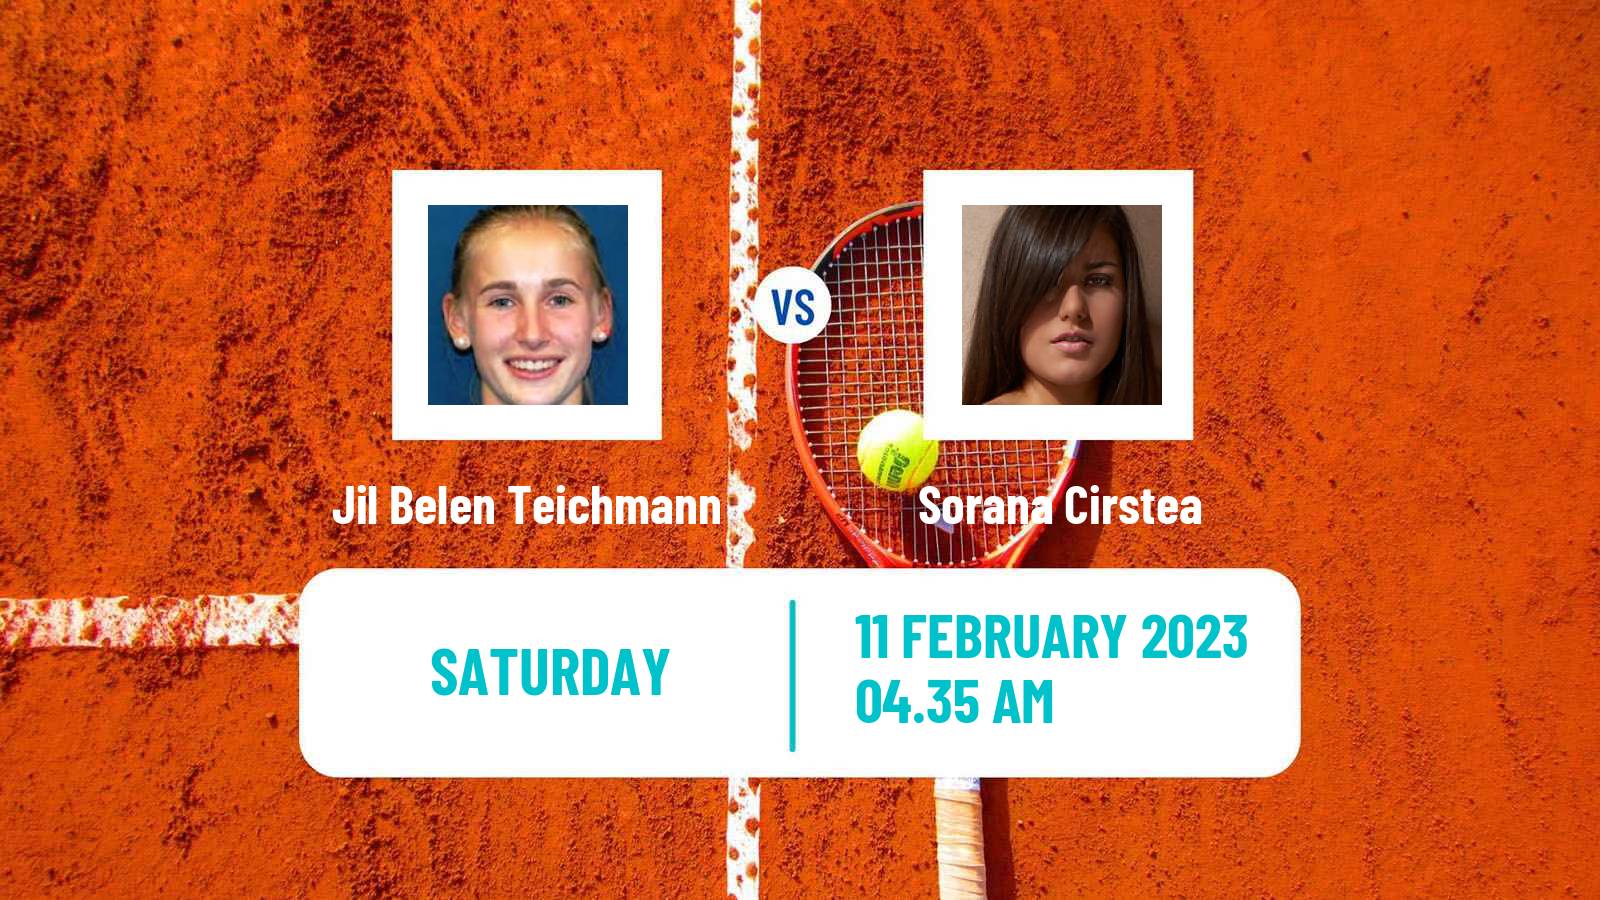 Tennis WTA Doha Jil Belen Teichmann - Sorana Cirstea